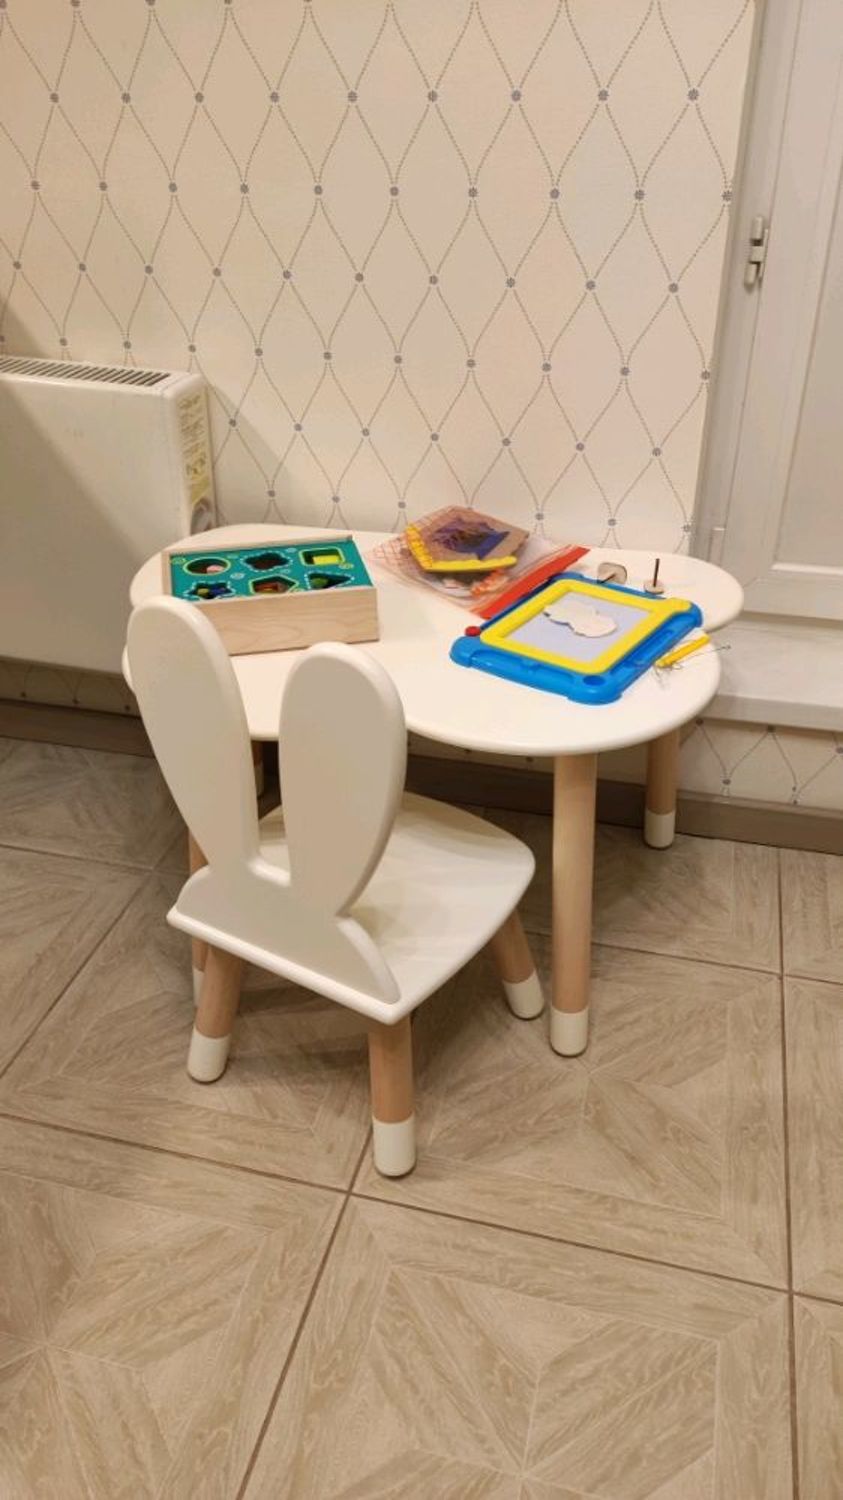 Photo №1 к отзыву покупателя Demina Irina о товаре Стол и стул для ребенка